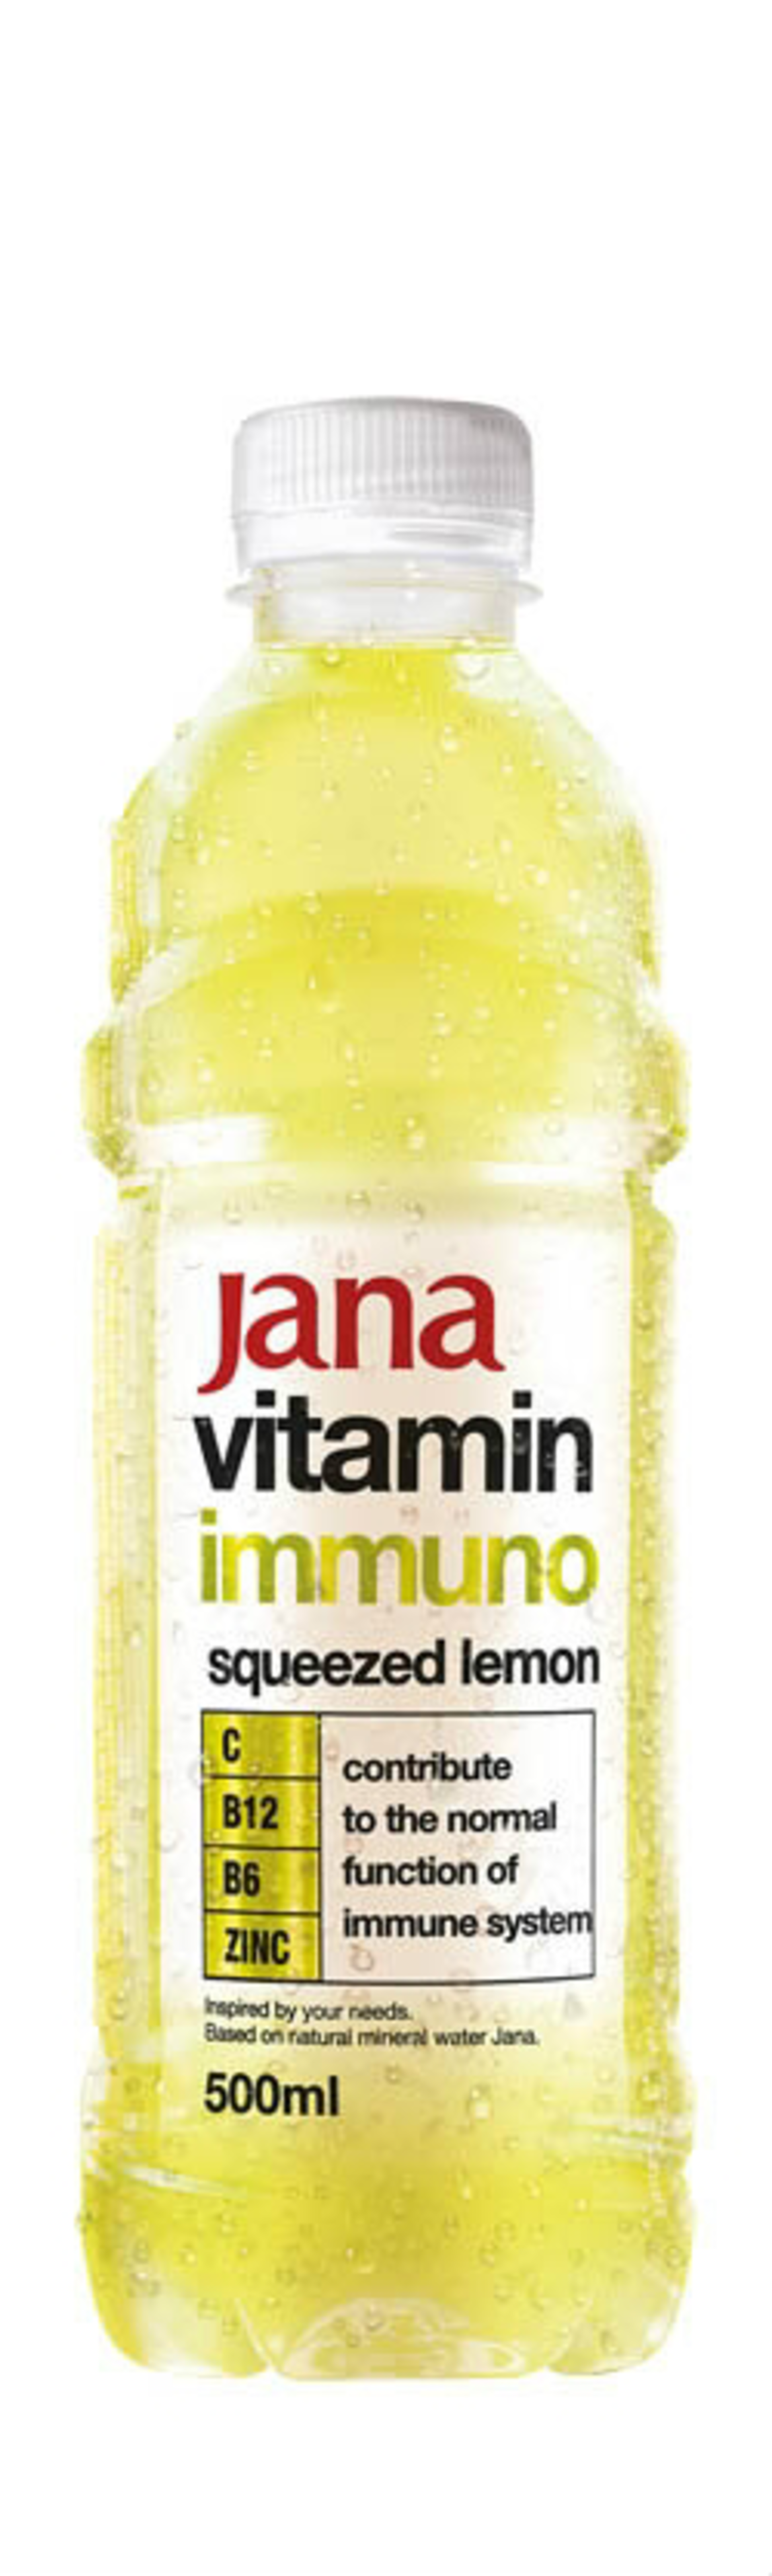 Jana Vitamin Water citron 500 ml - expirace